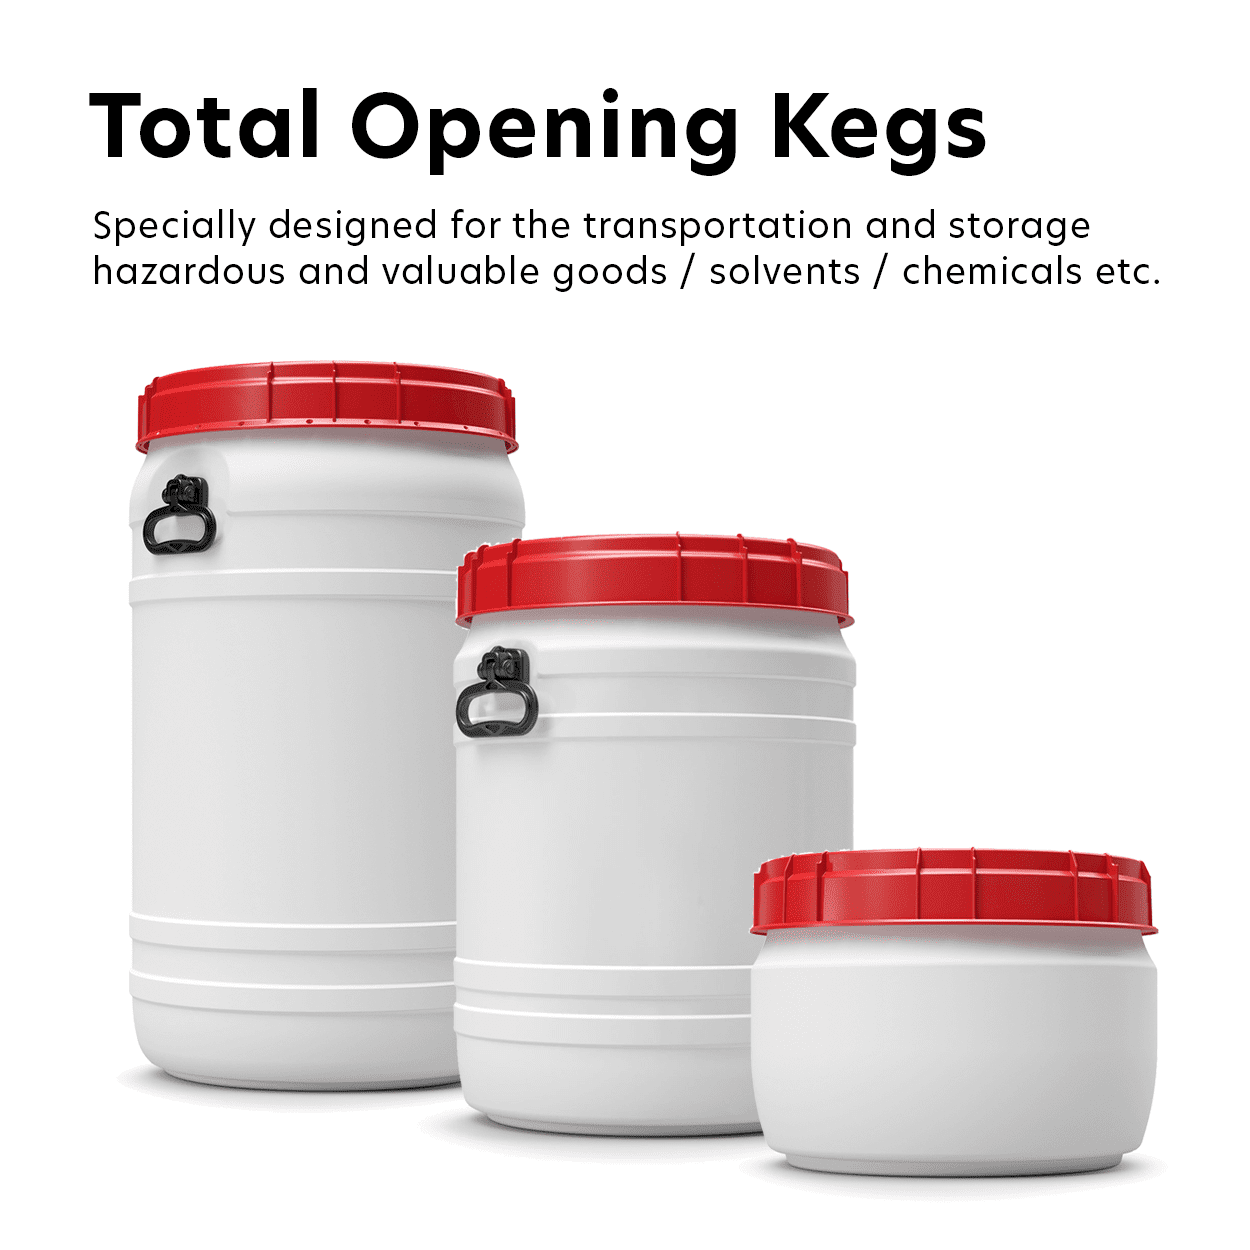 Total Opening Kegs